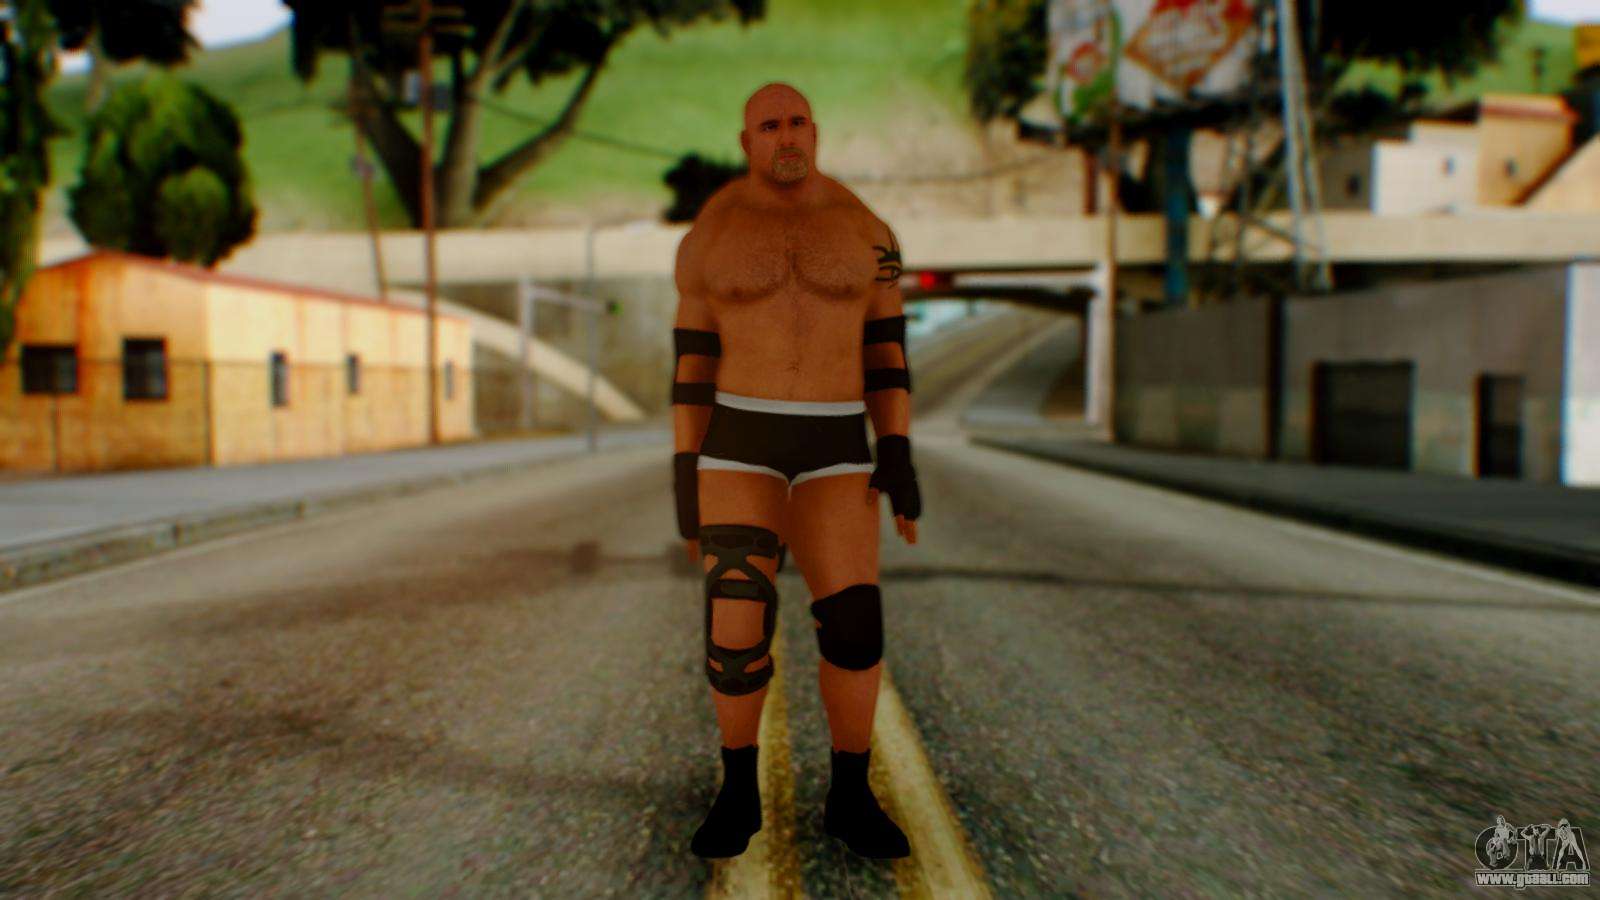 WWE Goldberg  Addon/Replace - GTA5-Mods.com